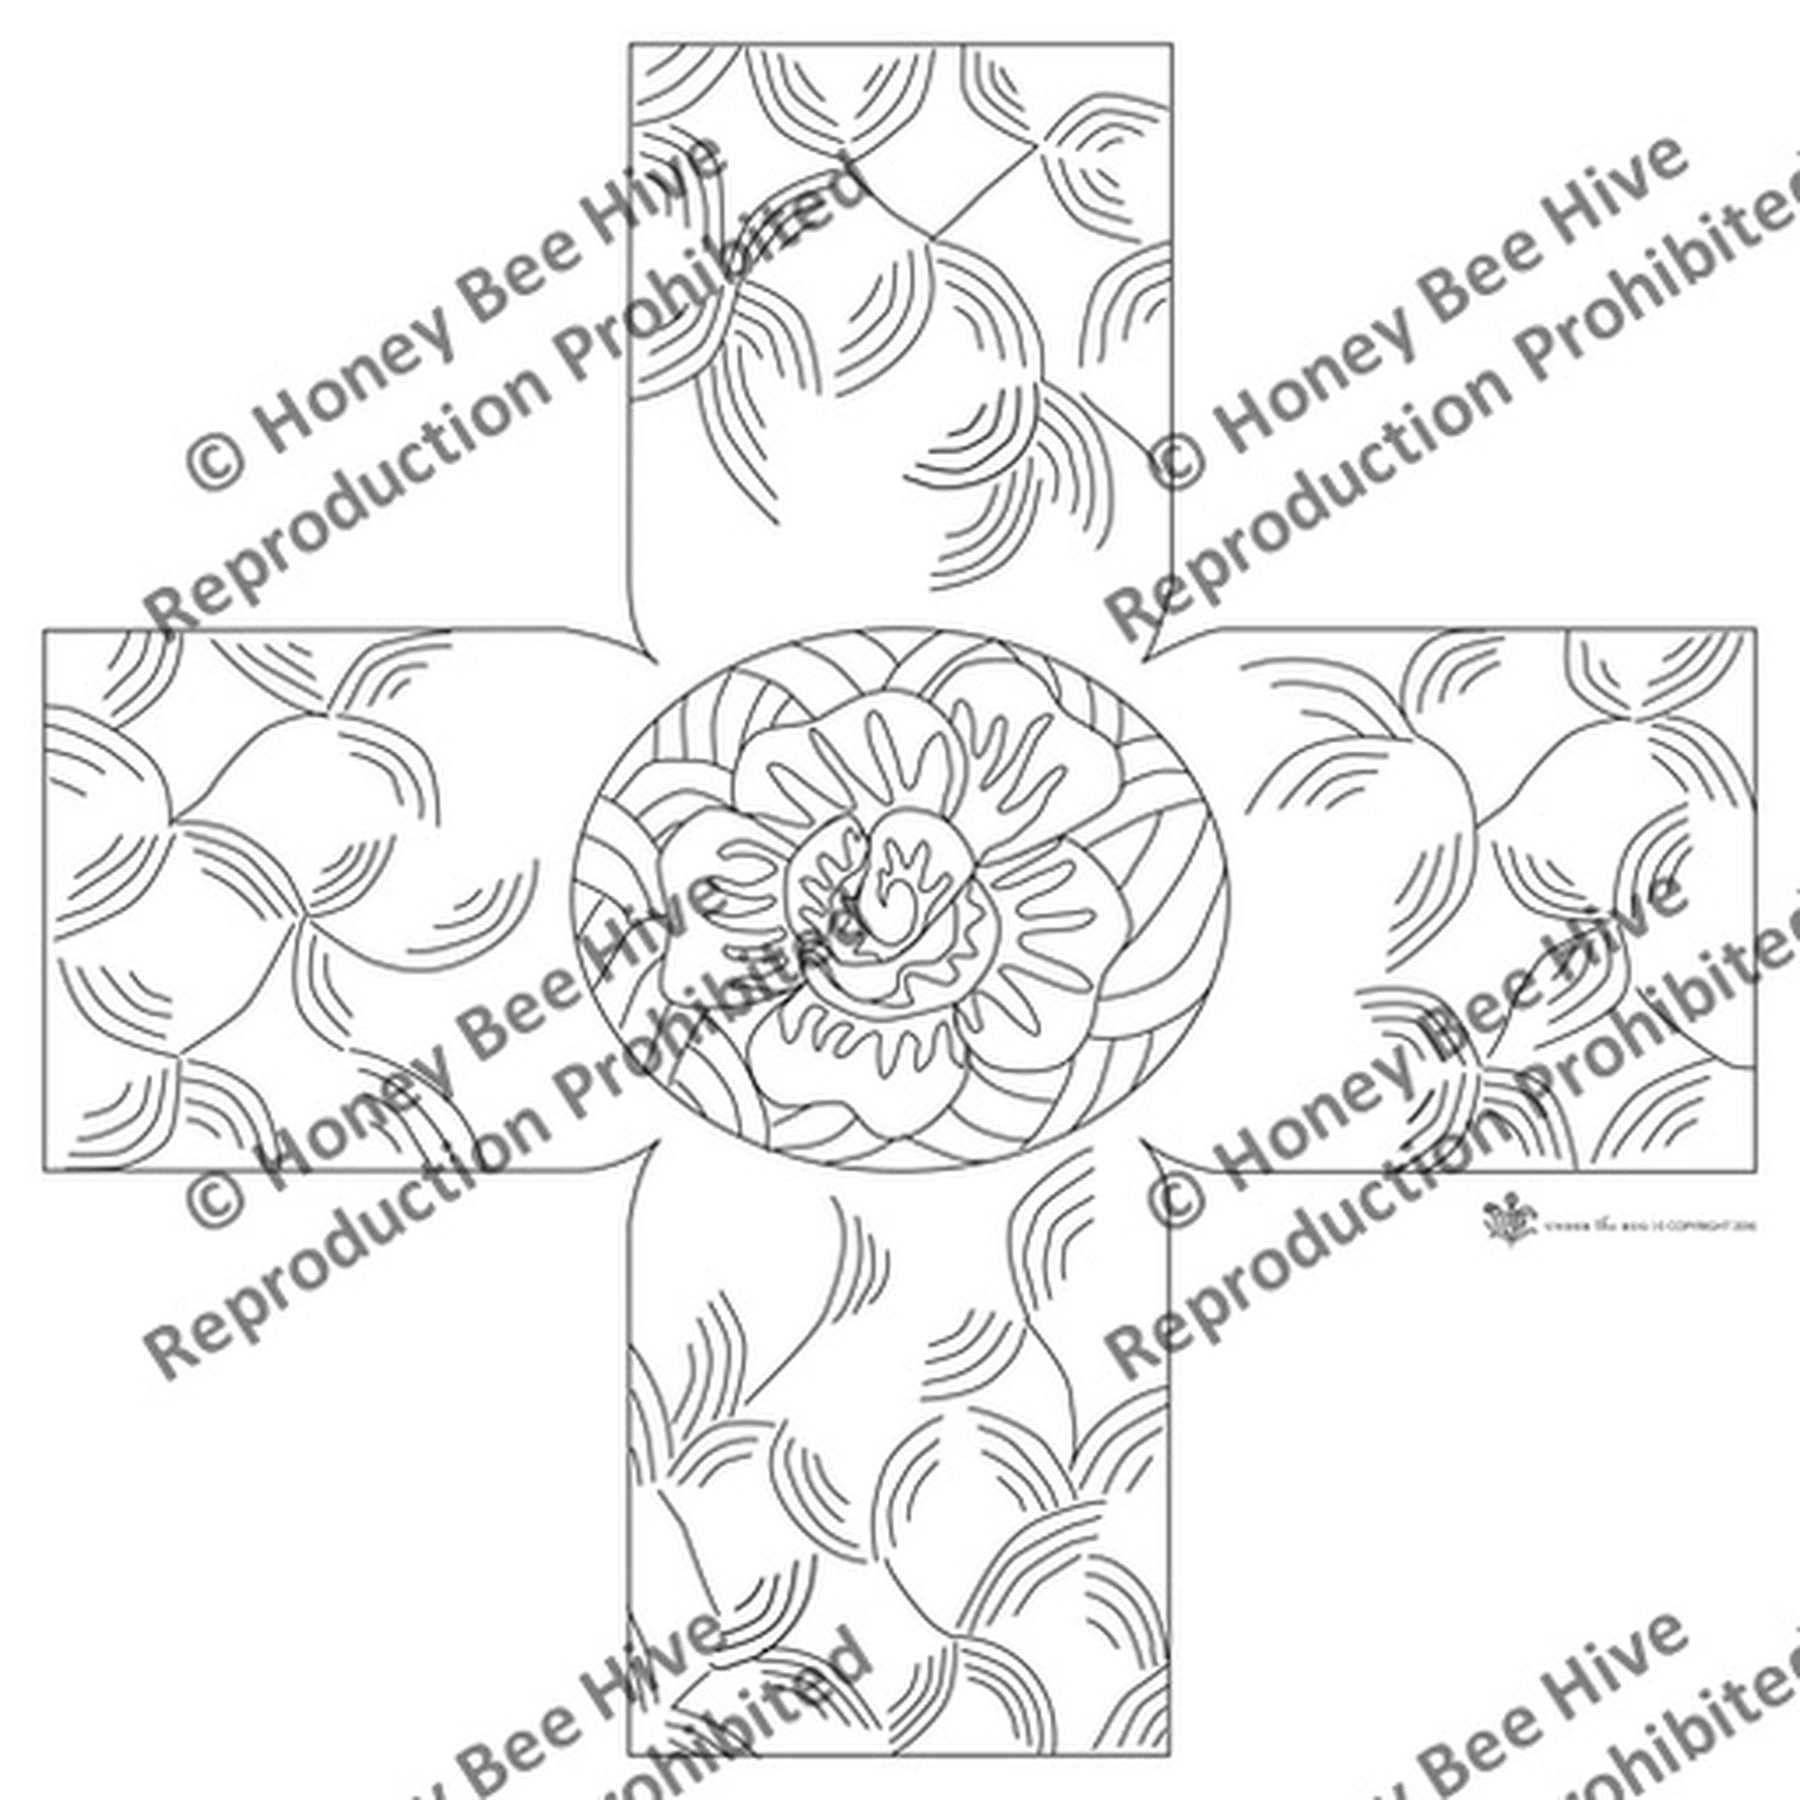 Marriage - Cube Footstool Pattern, rug hooking pattern